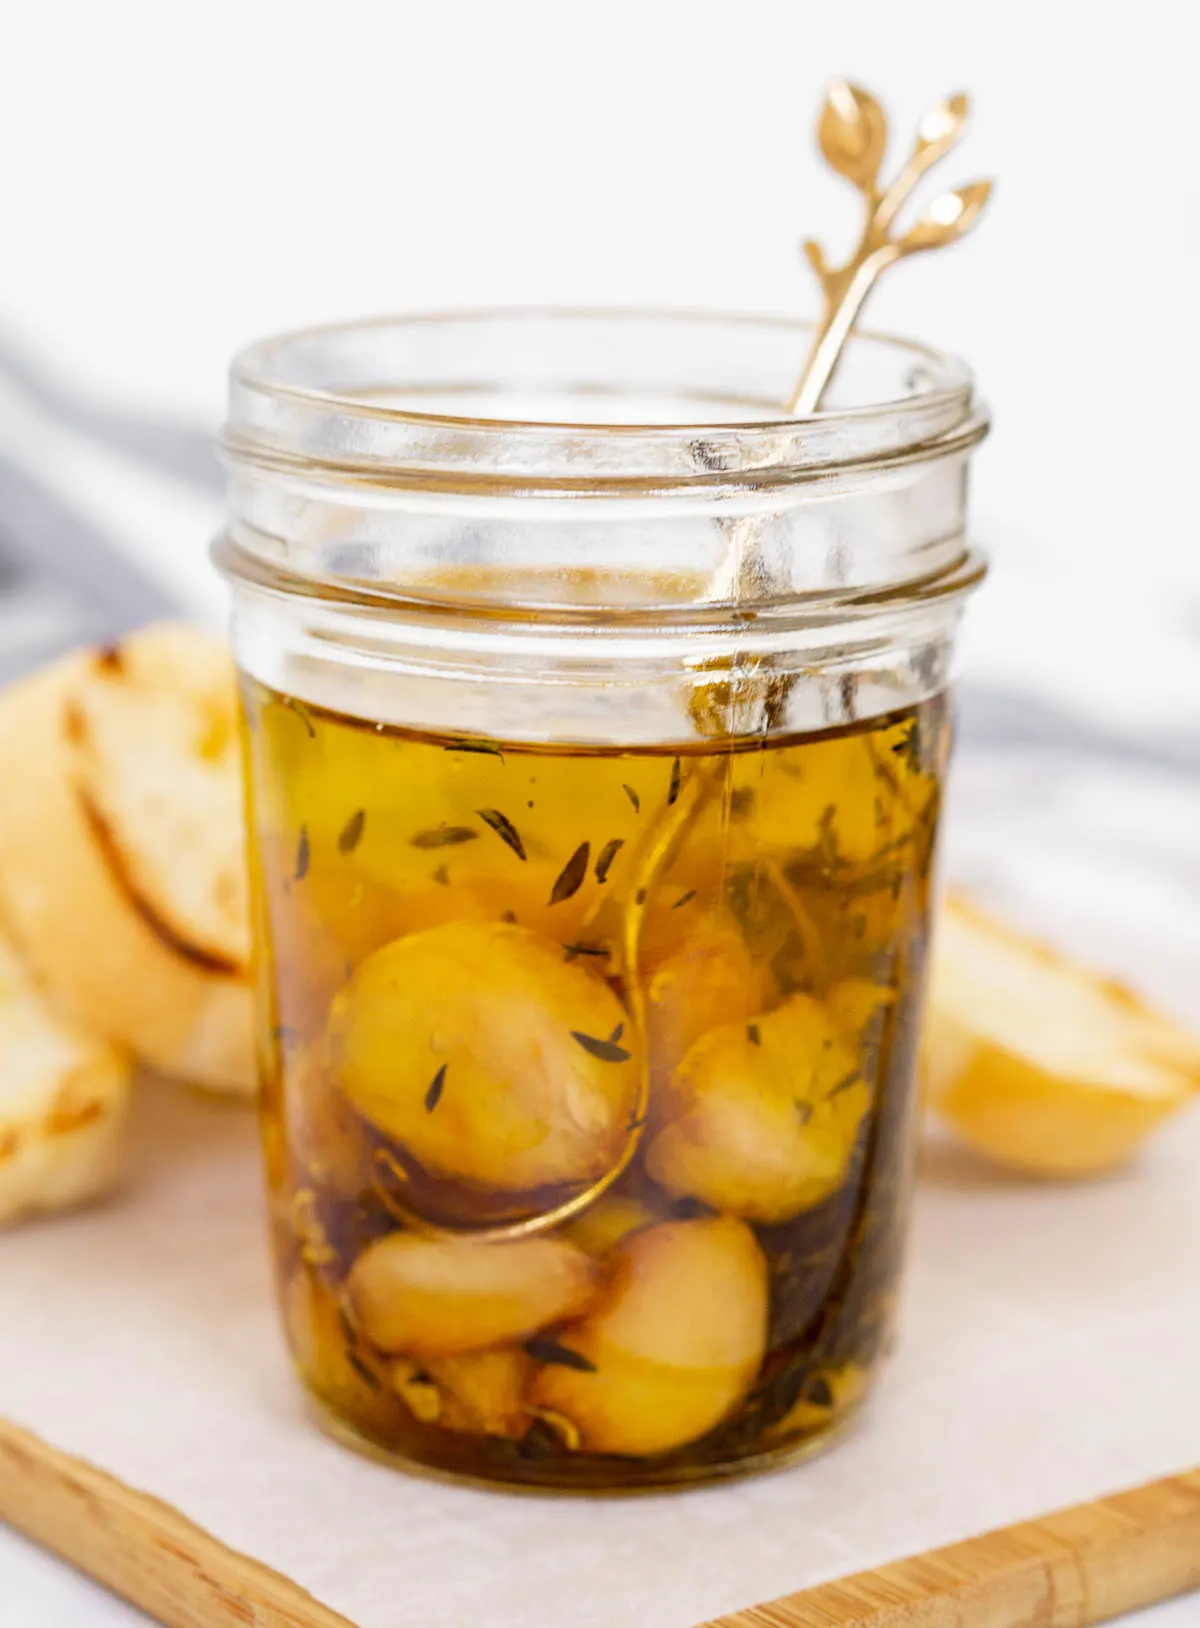 Jar with garlic confit cloves in olive oil